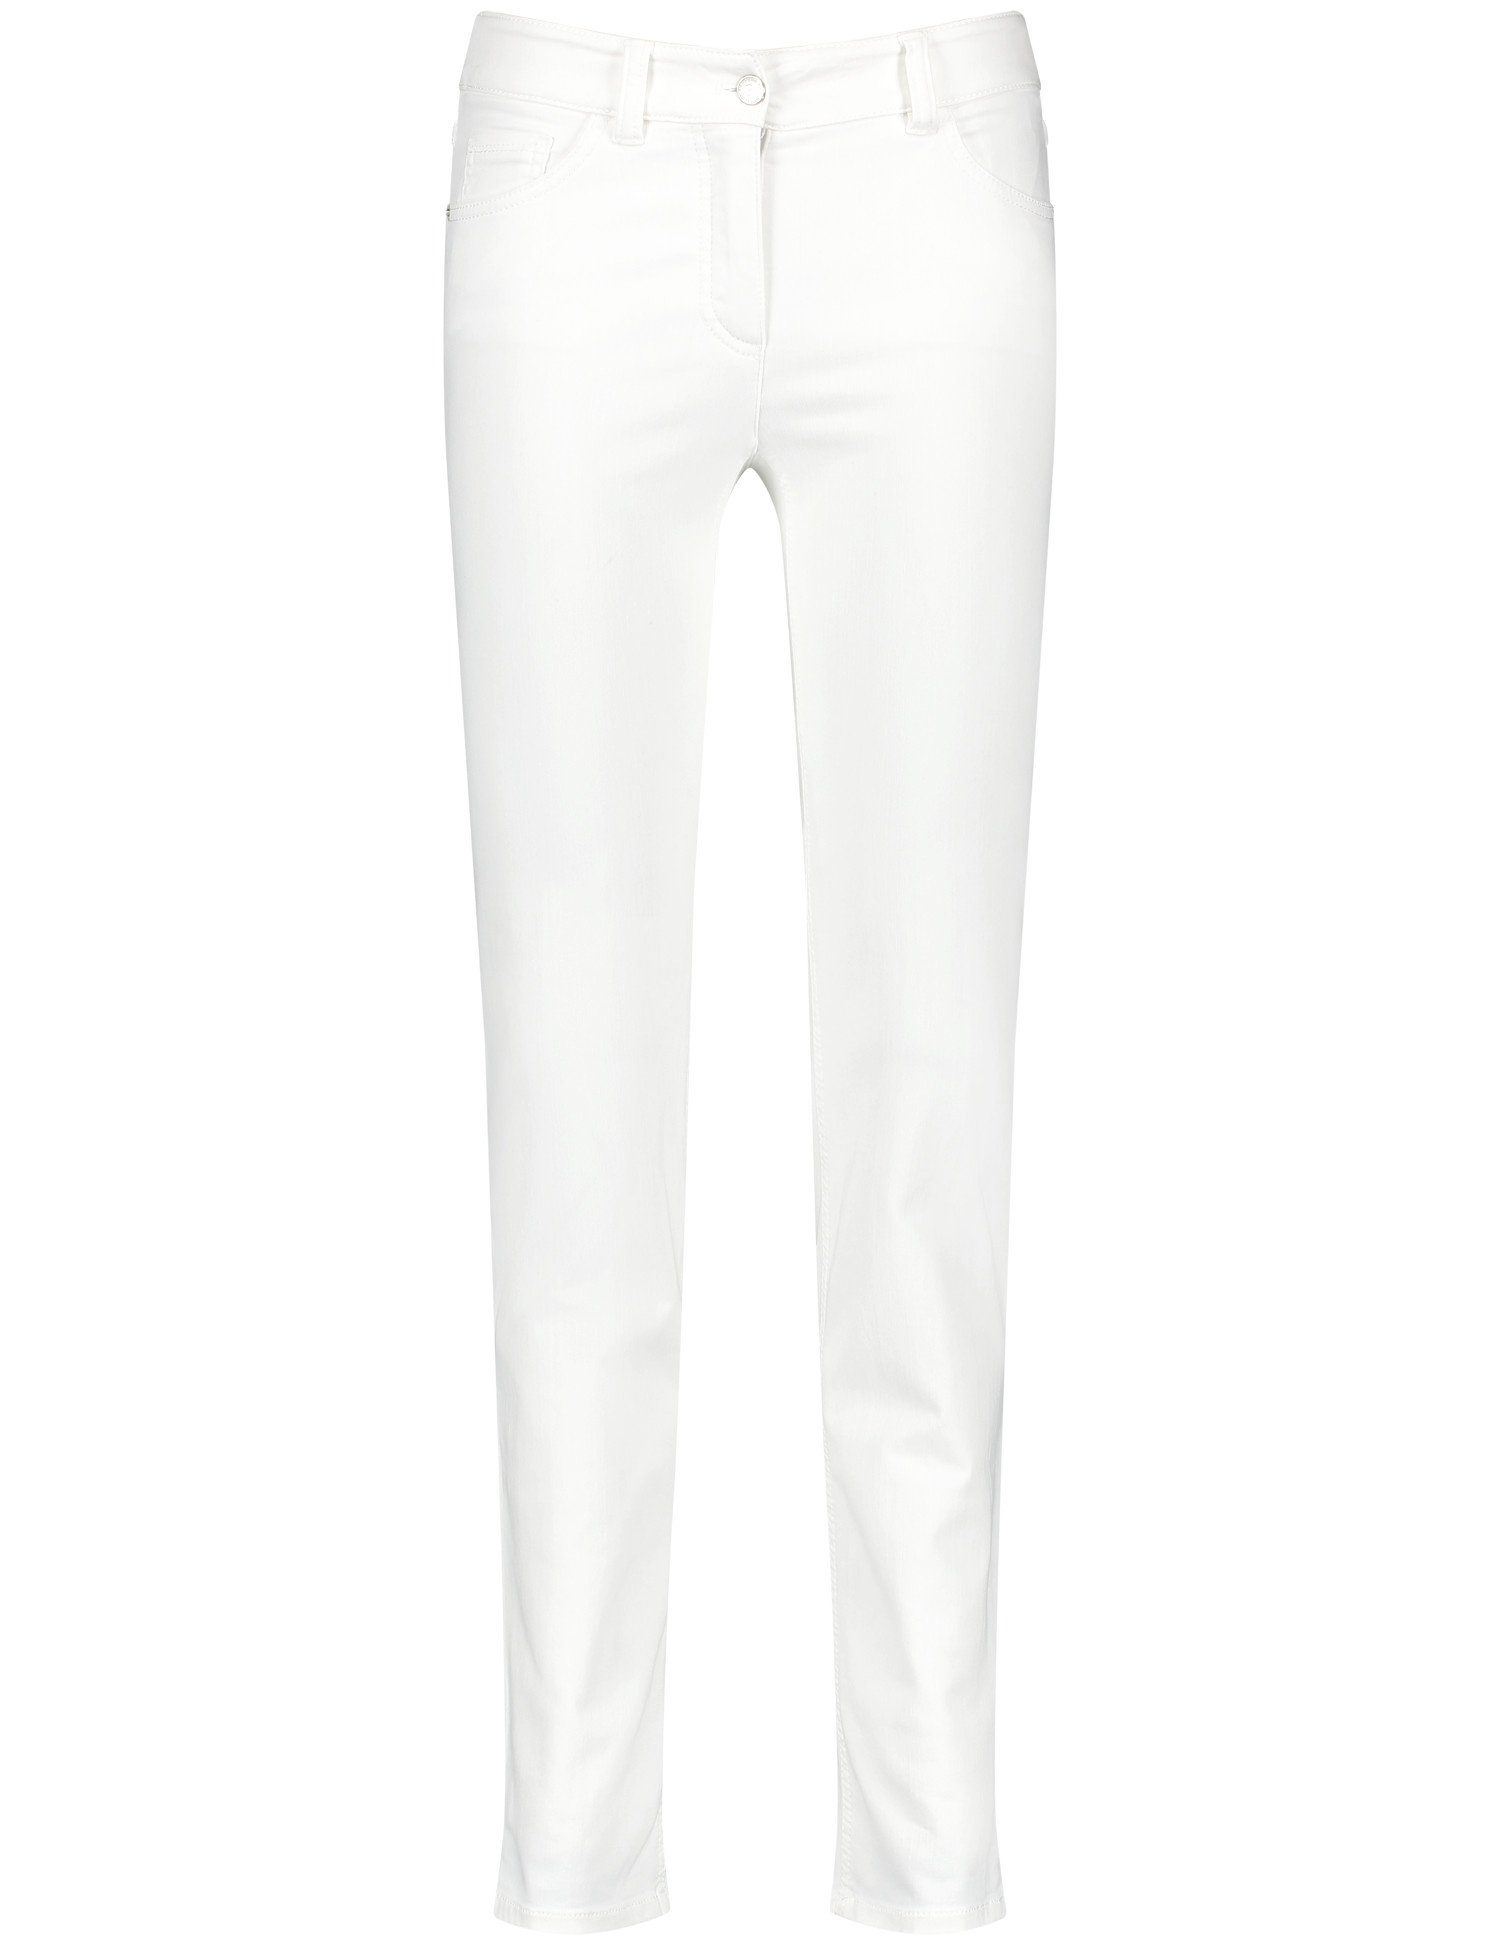 GERRY WEBER Slim-fit-Jeans 5-pocket Hose Slim Fit weiss/weiss